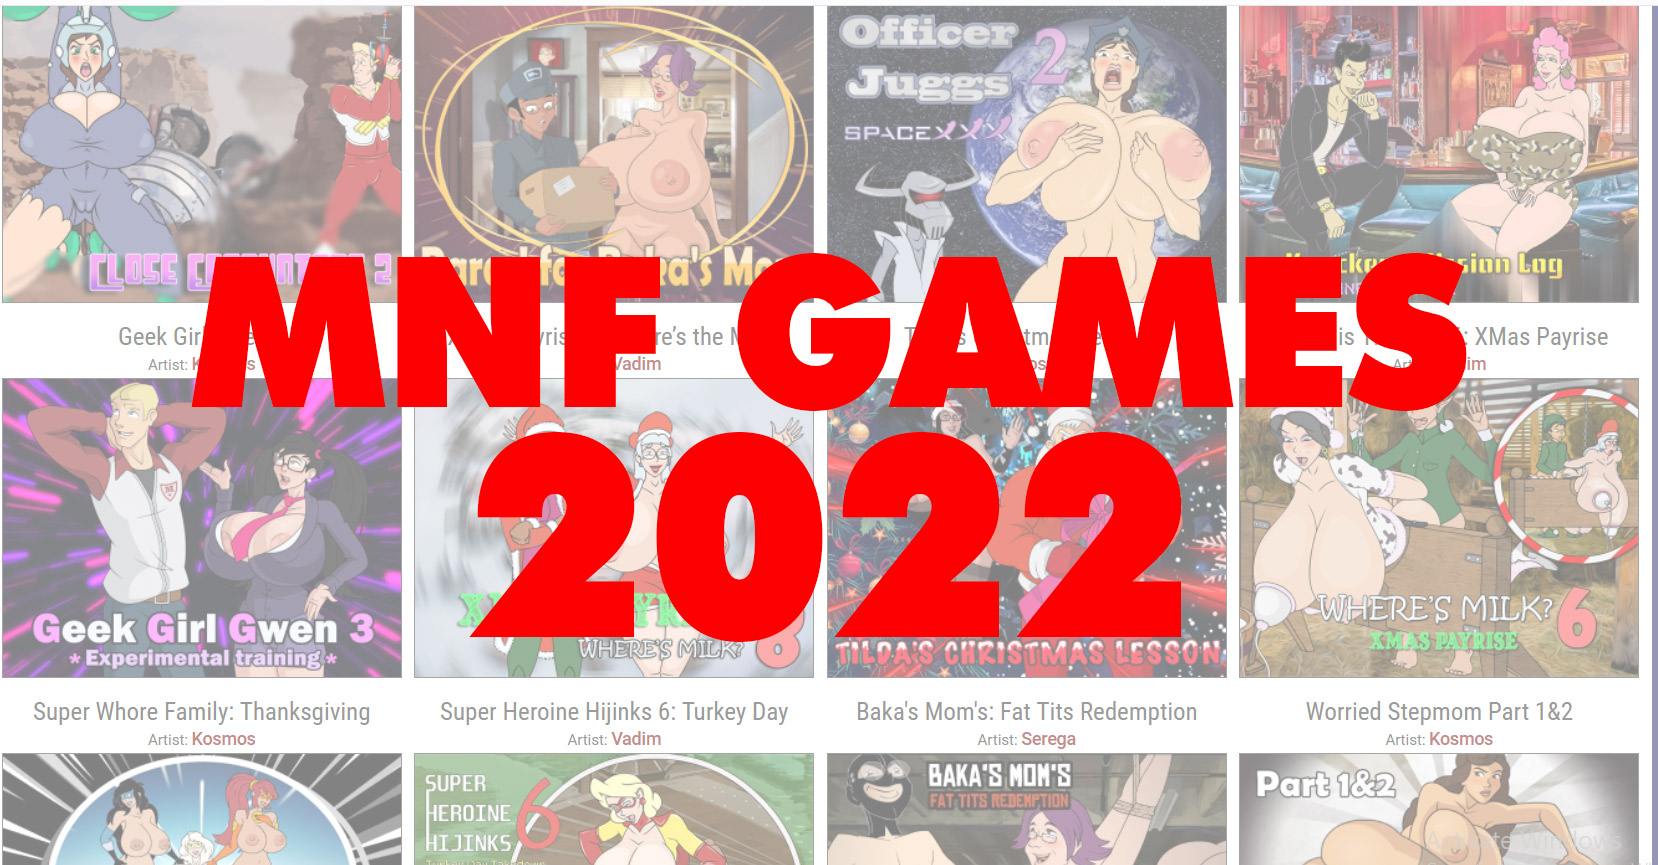 meetandfuckgames-mega-pack-2022-full-version-free